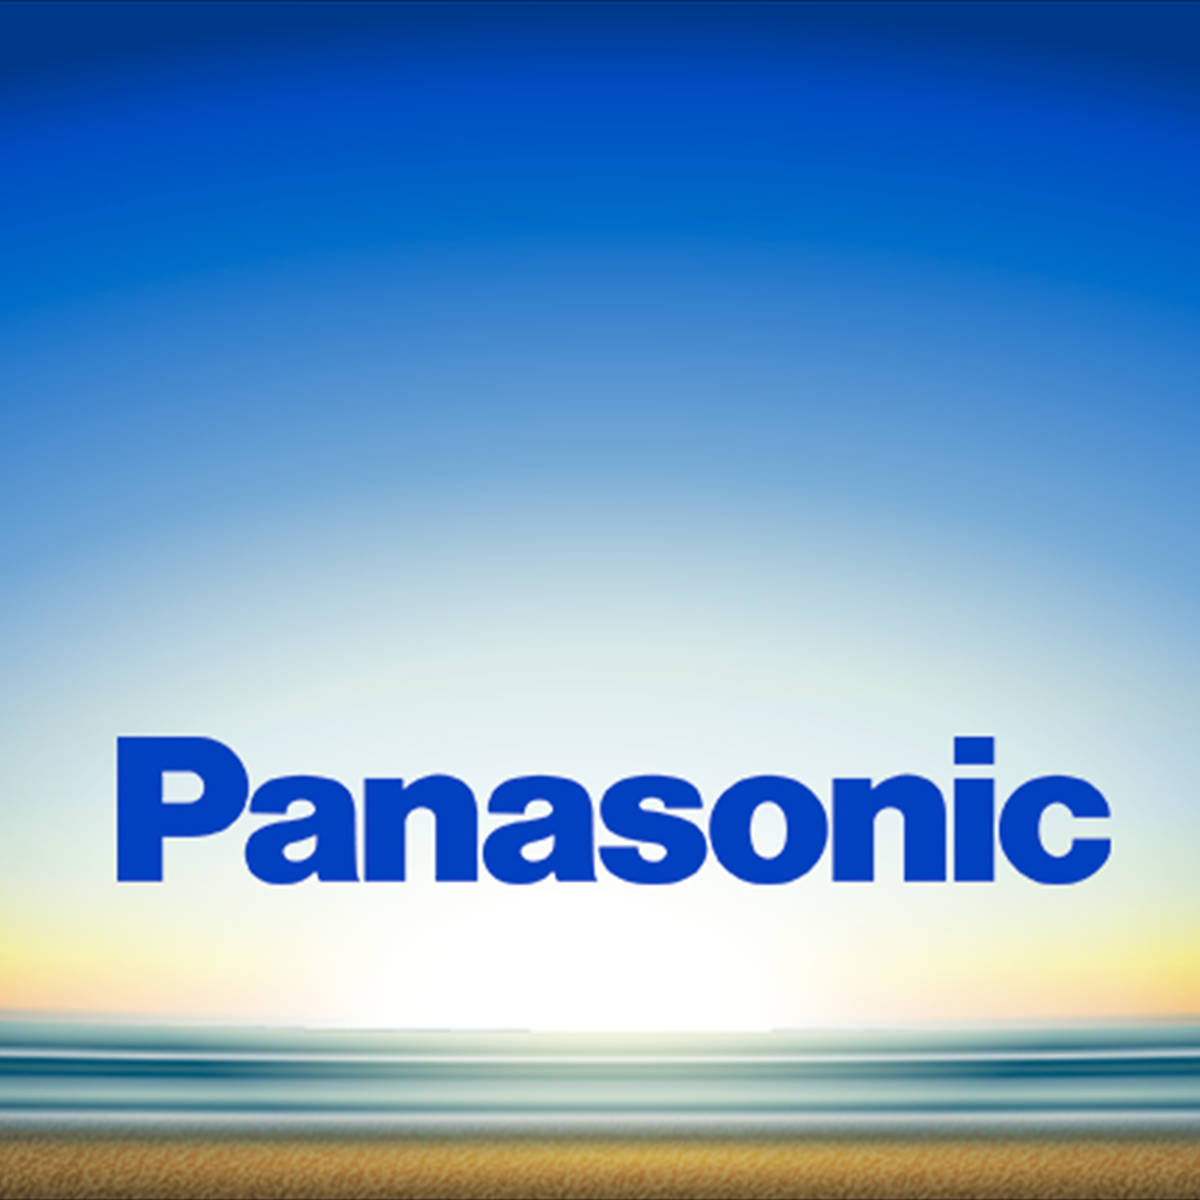 Free Panasonic Wallpaper Downloads, [100+] Panasonic Wallpapers for FREE |  